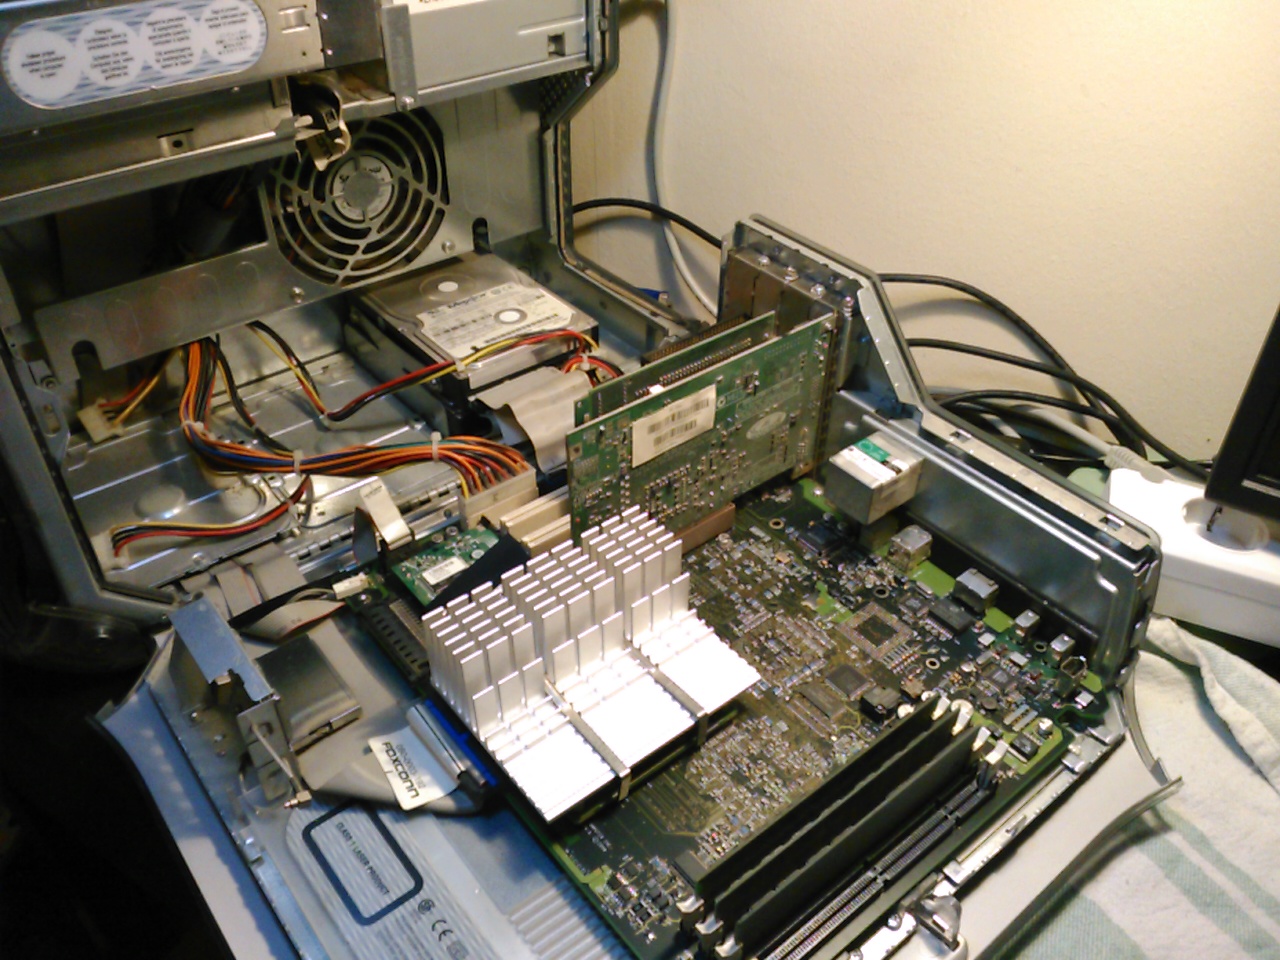 Open computer, motherboard exposed